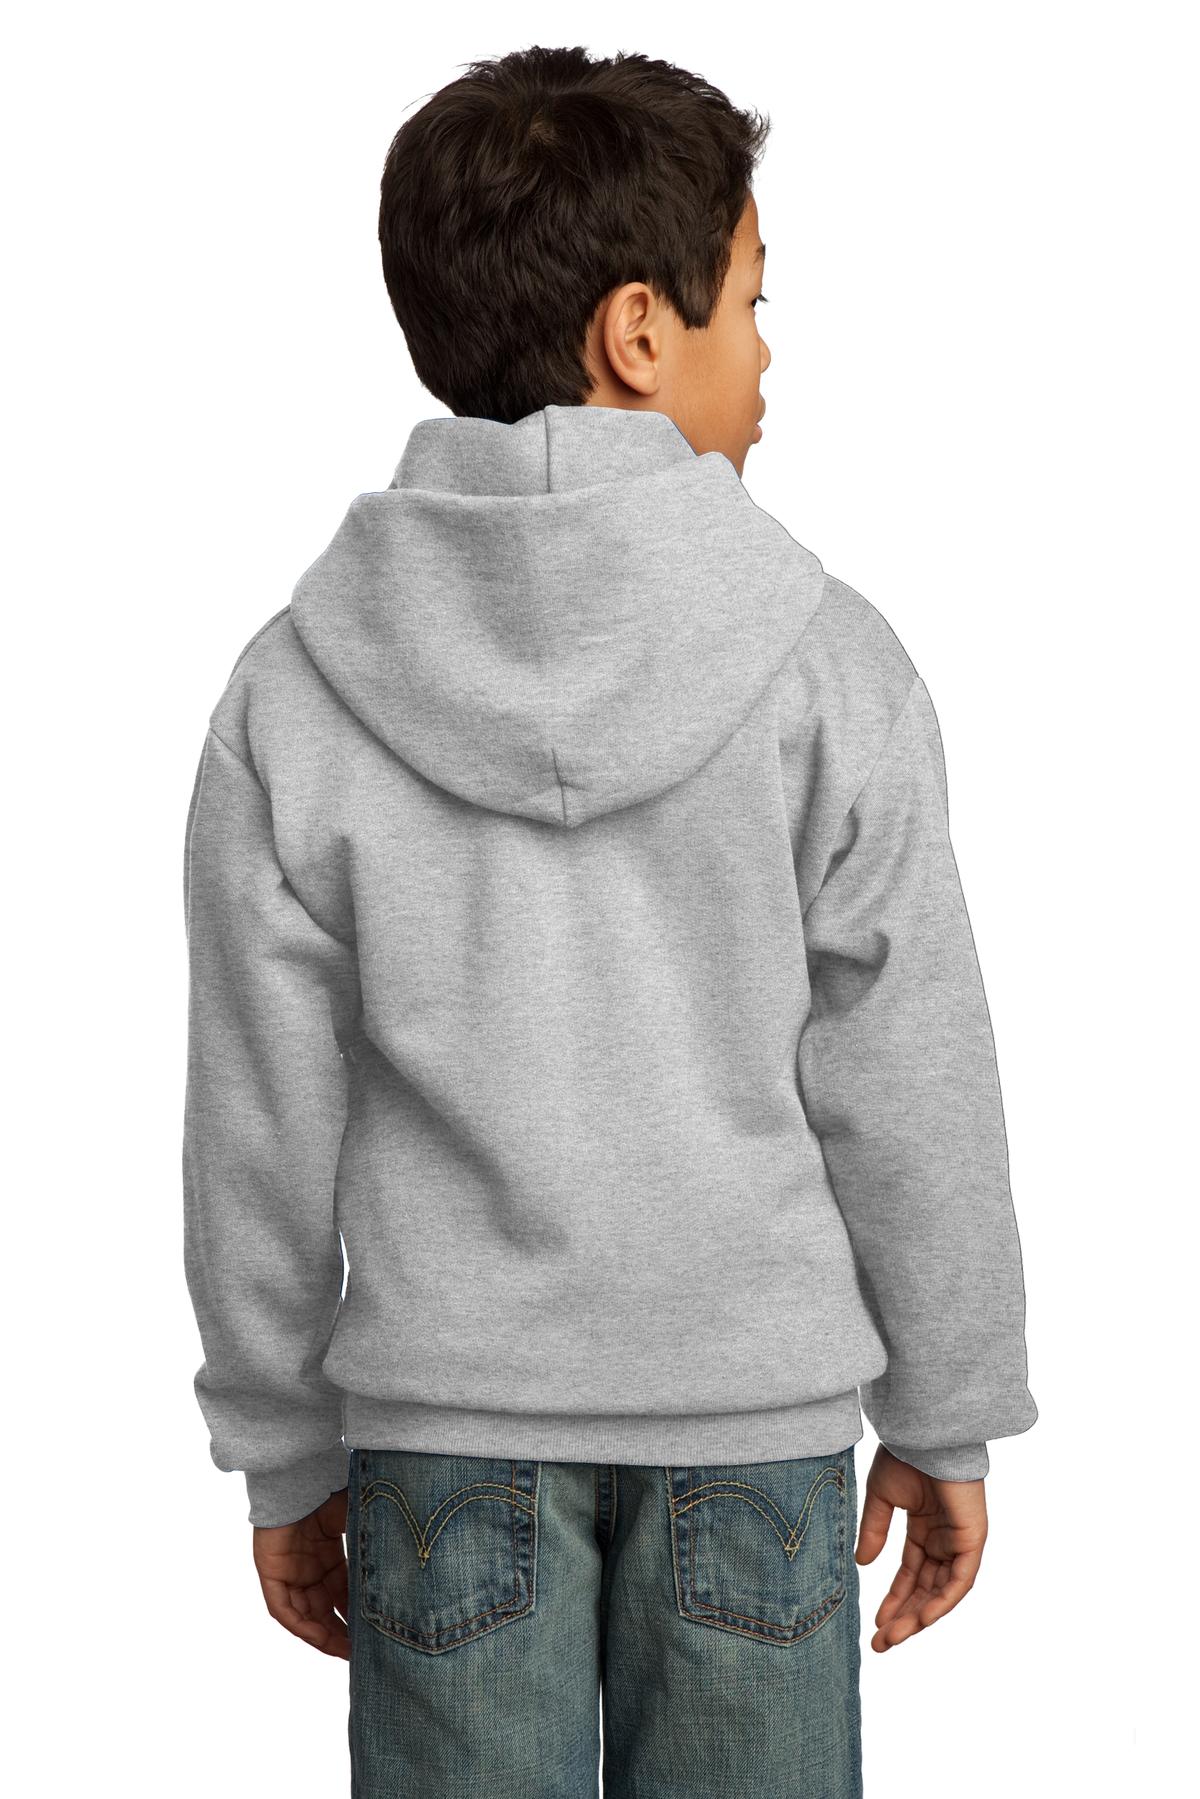 Port & Company - Youth Core Fleece Pullover Hooded Sweatshirt. PC90YH - Ash